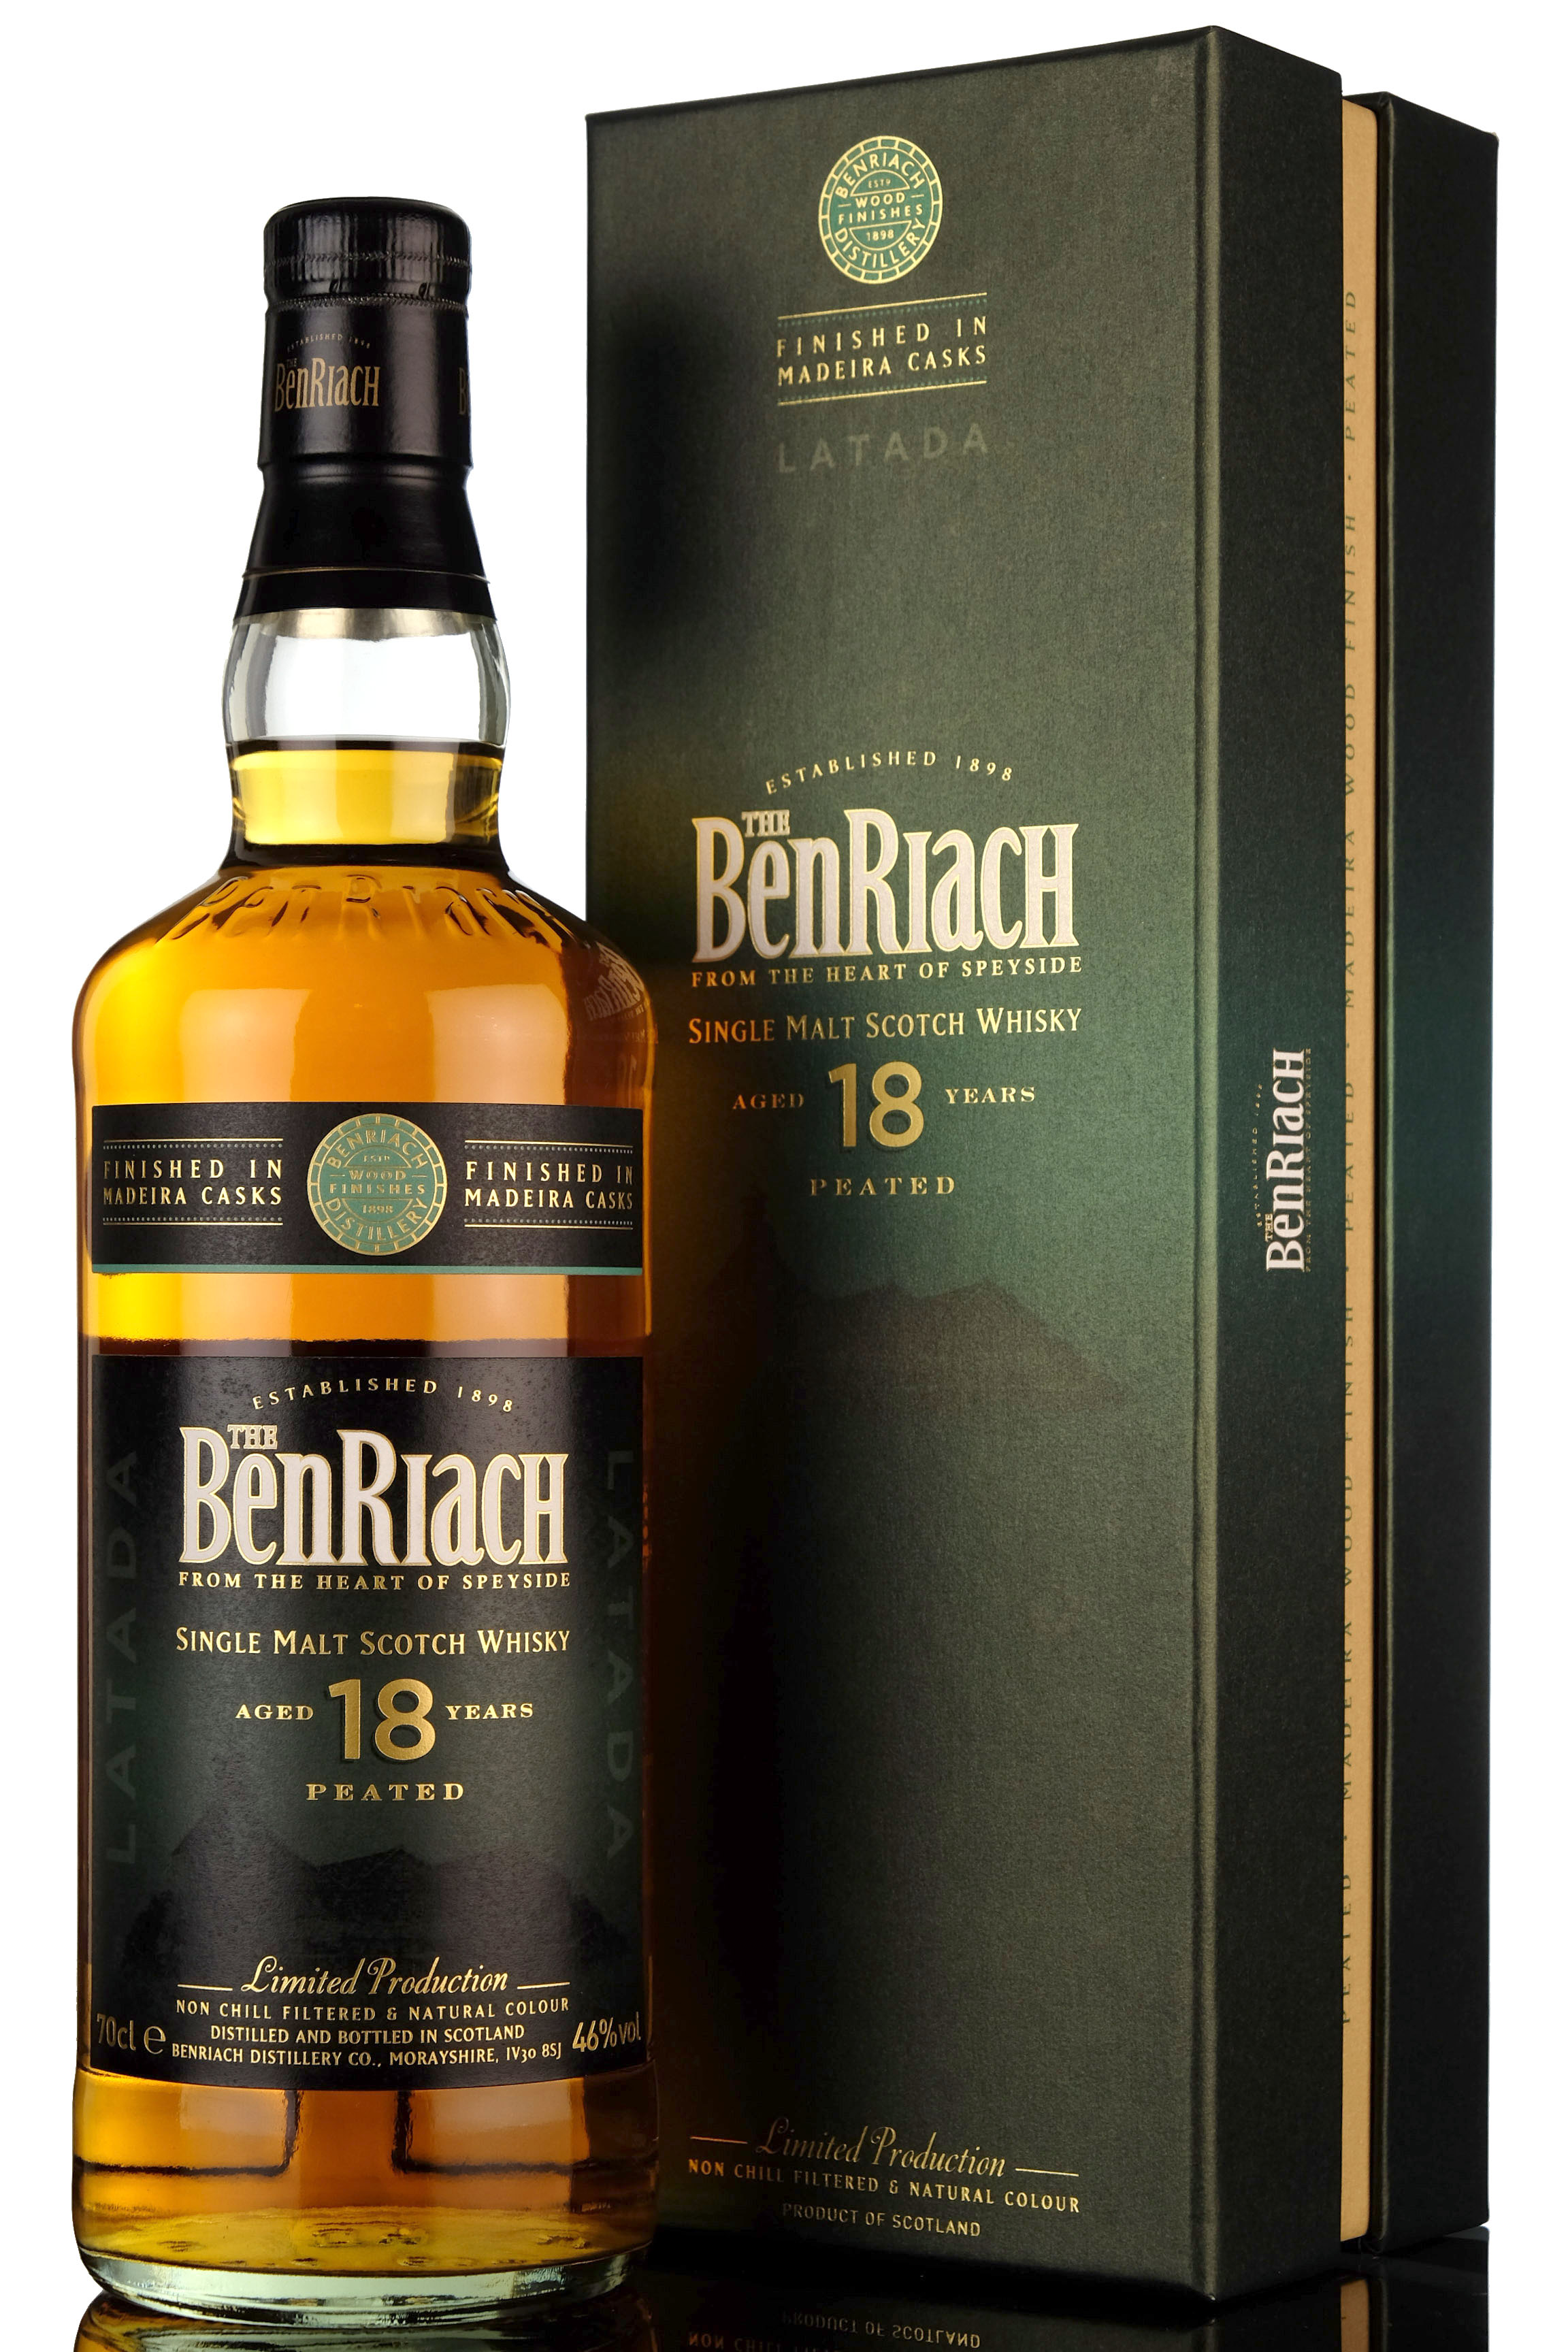 Benriach 18 Year Old - Latada - 2015 Release